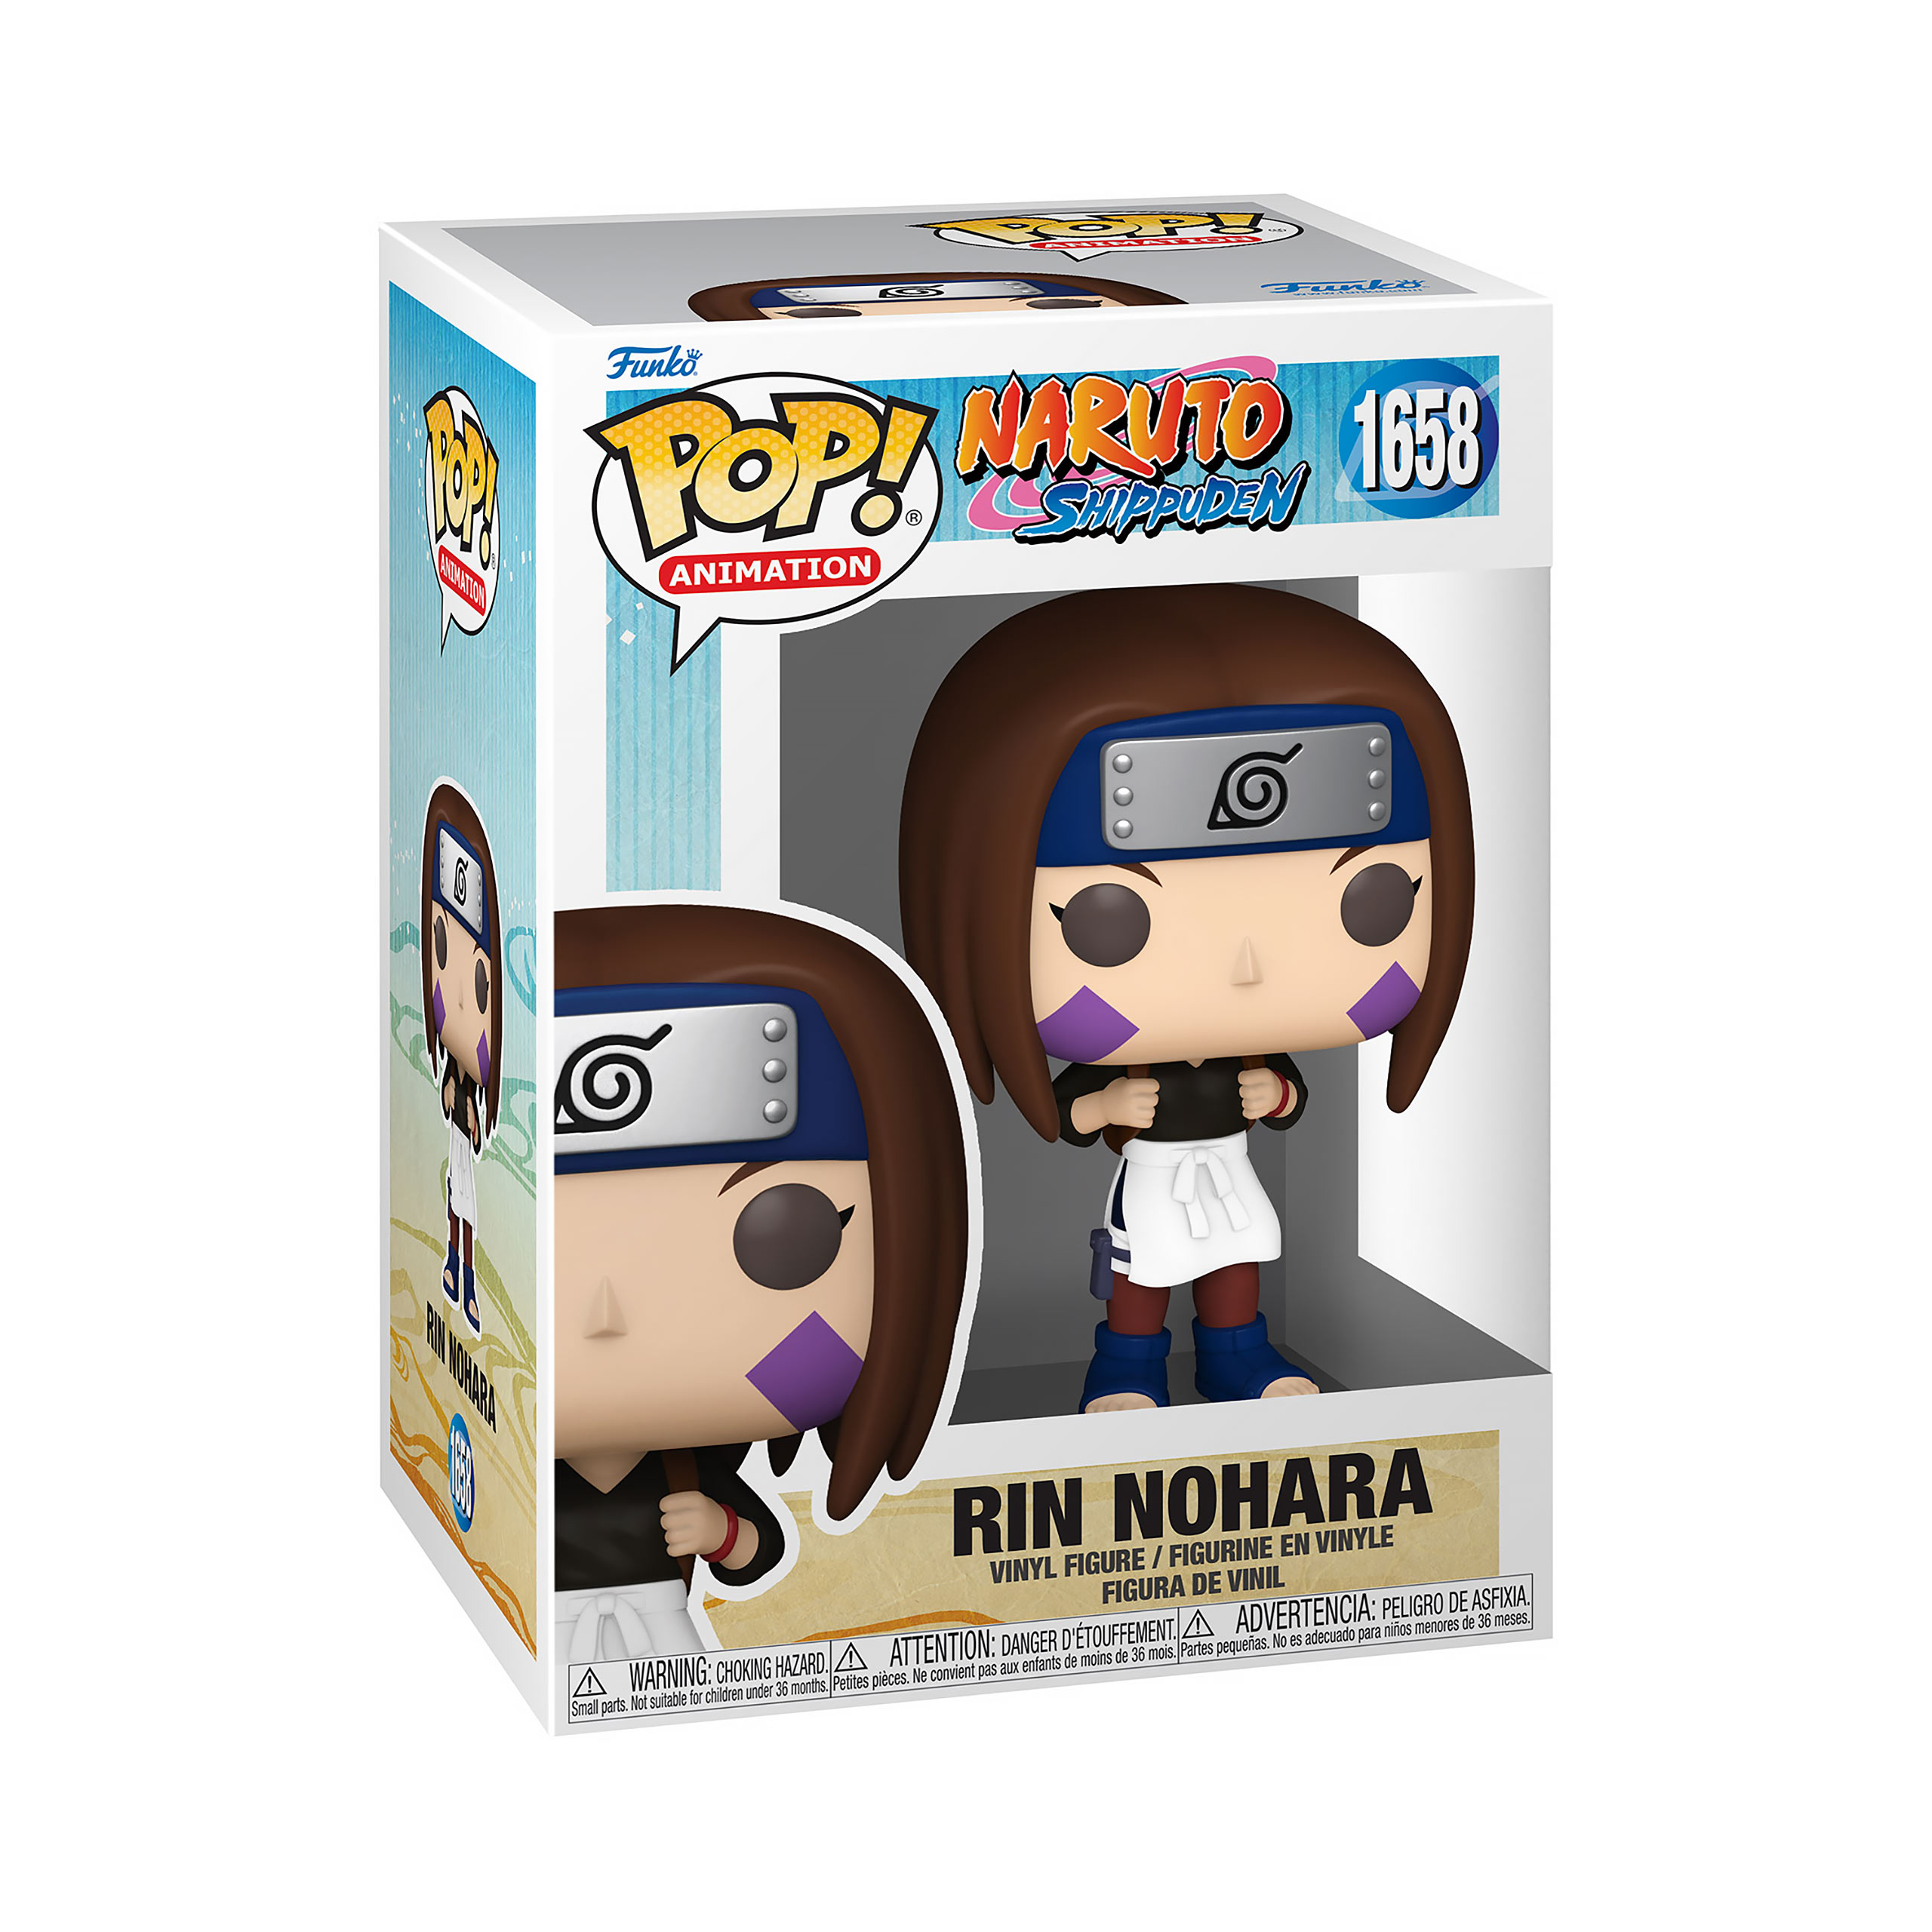 Naruto - Rin Nohara Funko Pop Figur